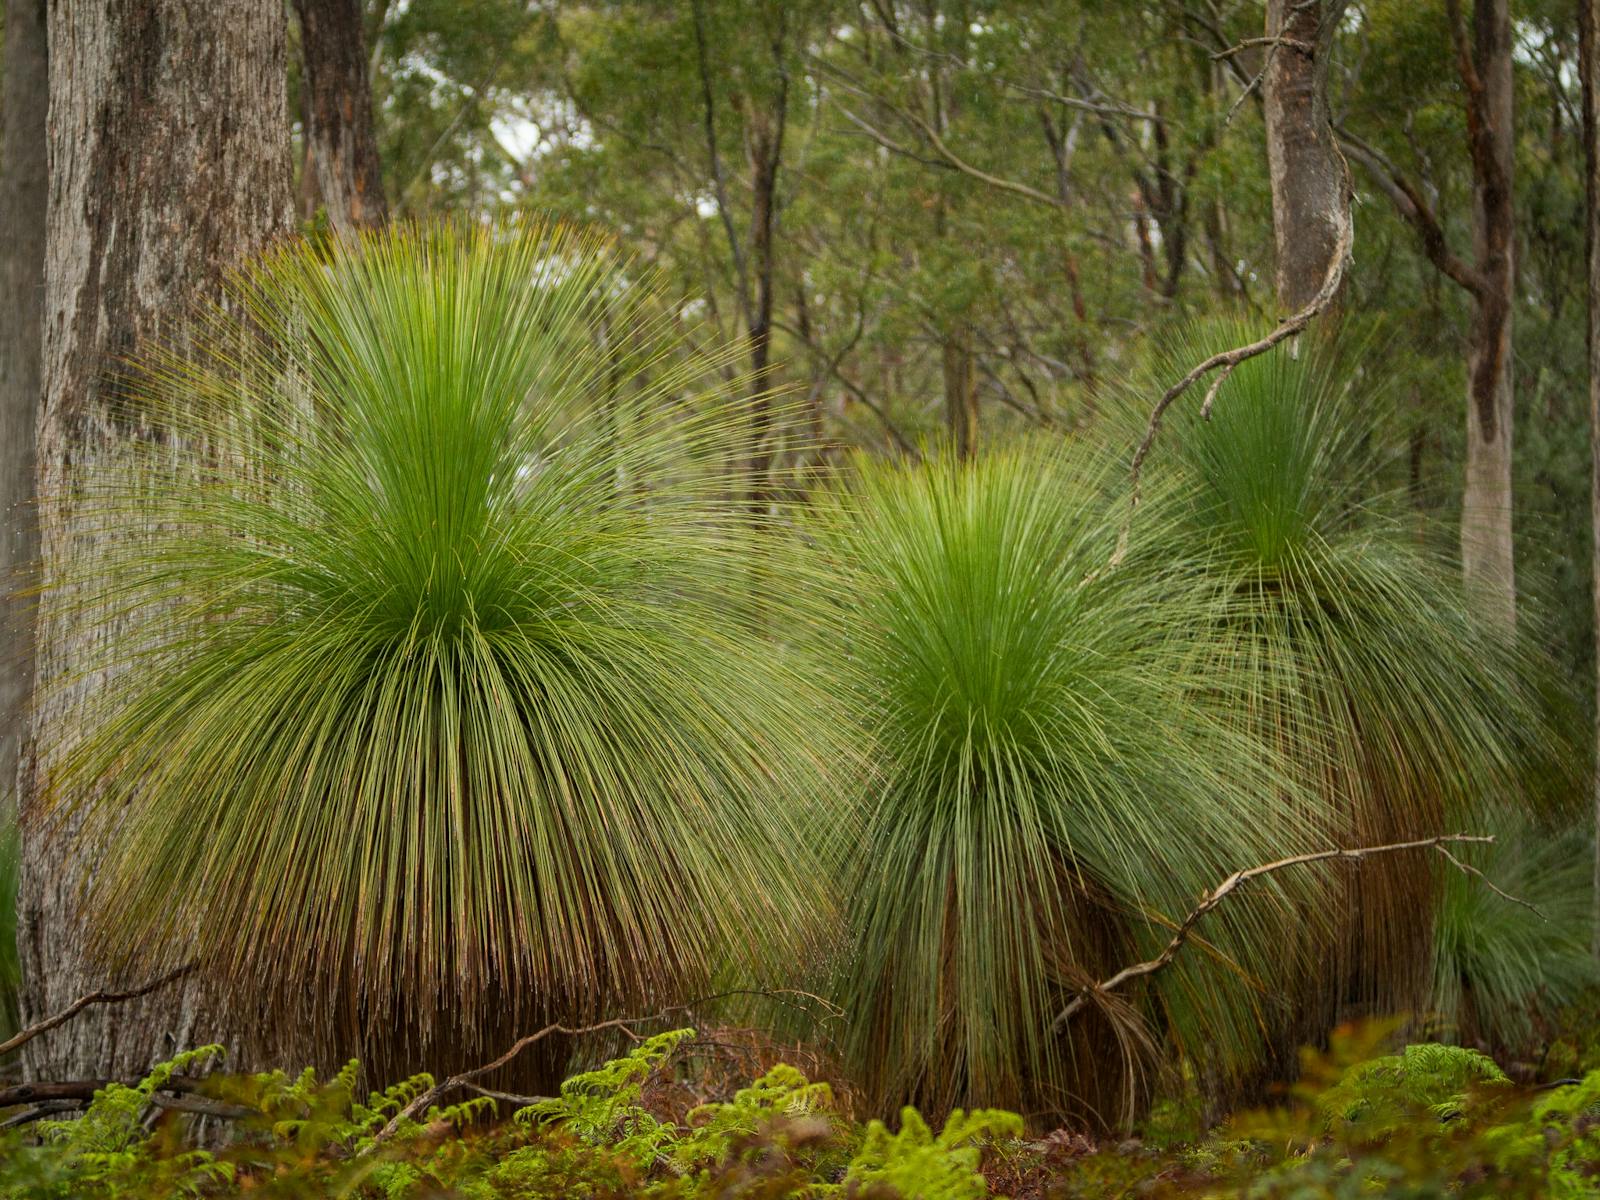 Grass trees, xanthorrhoea australis